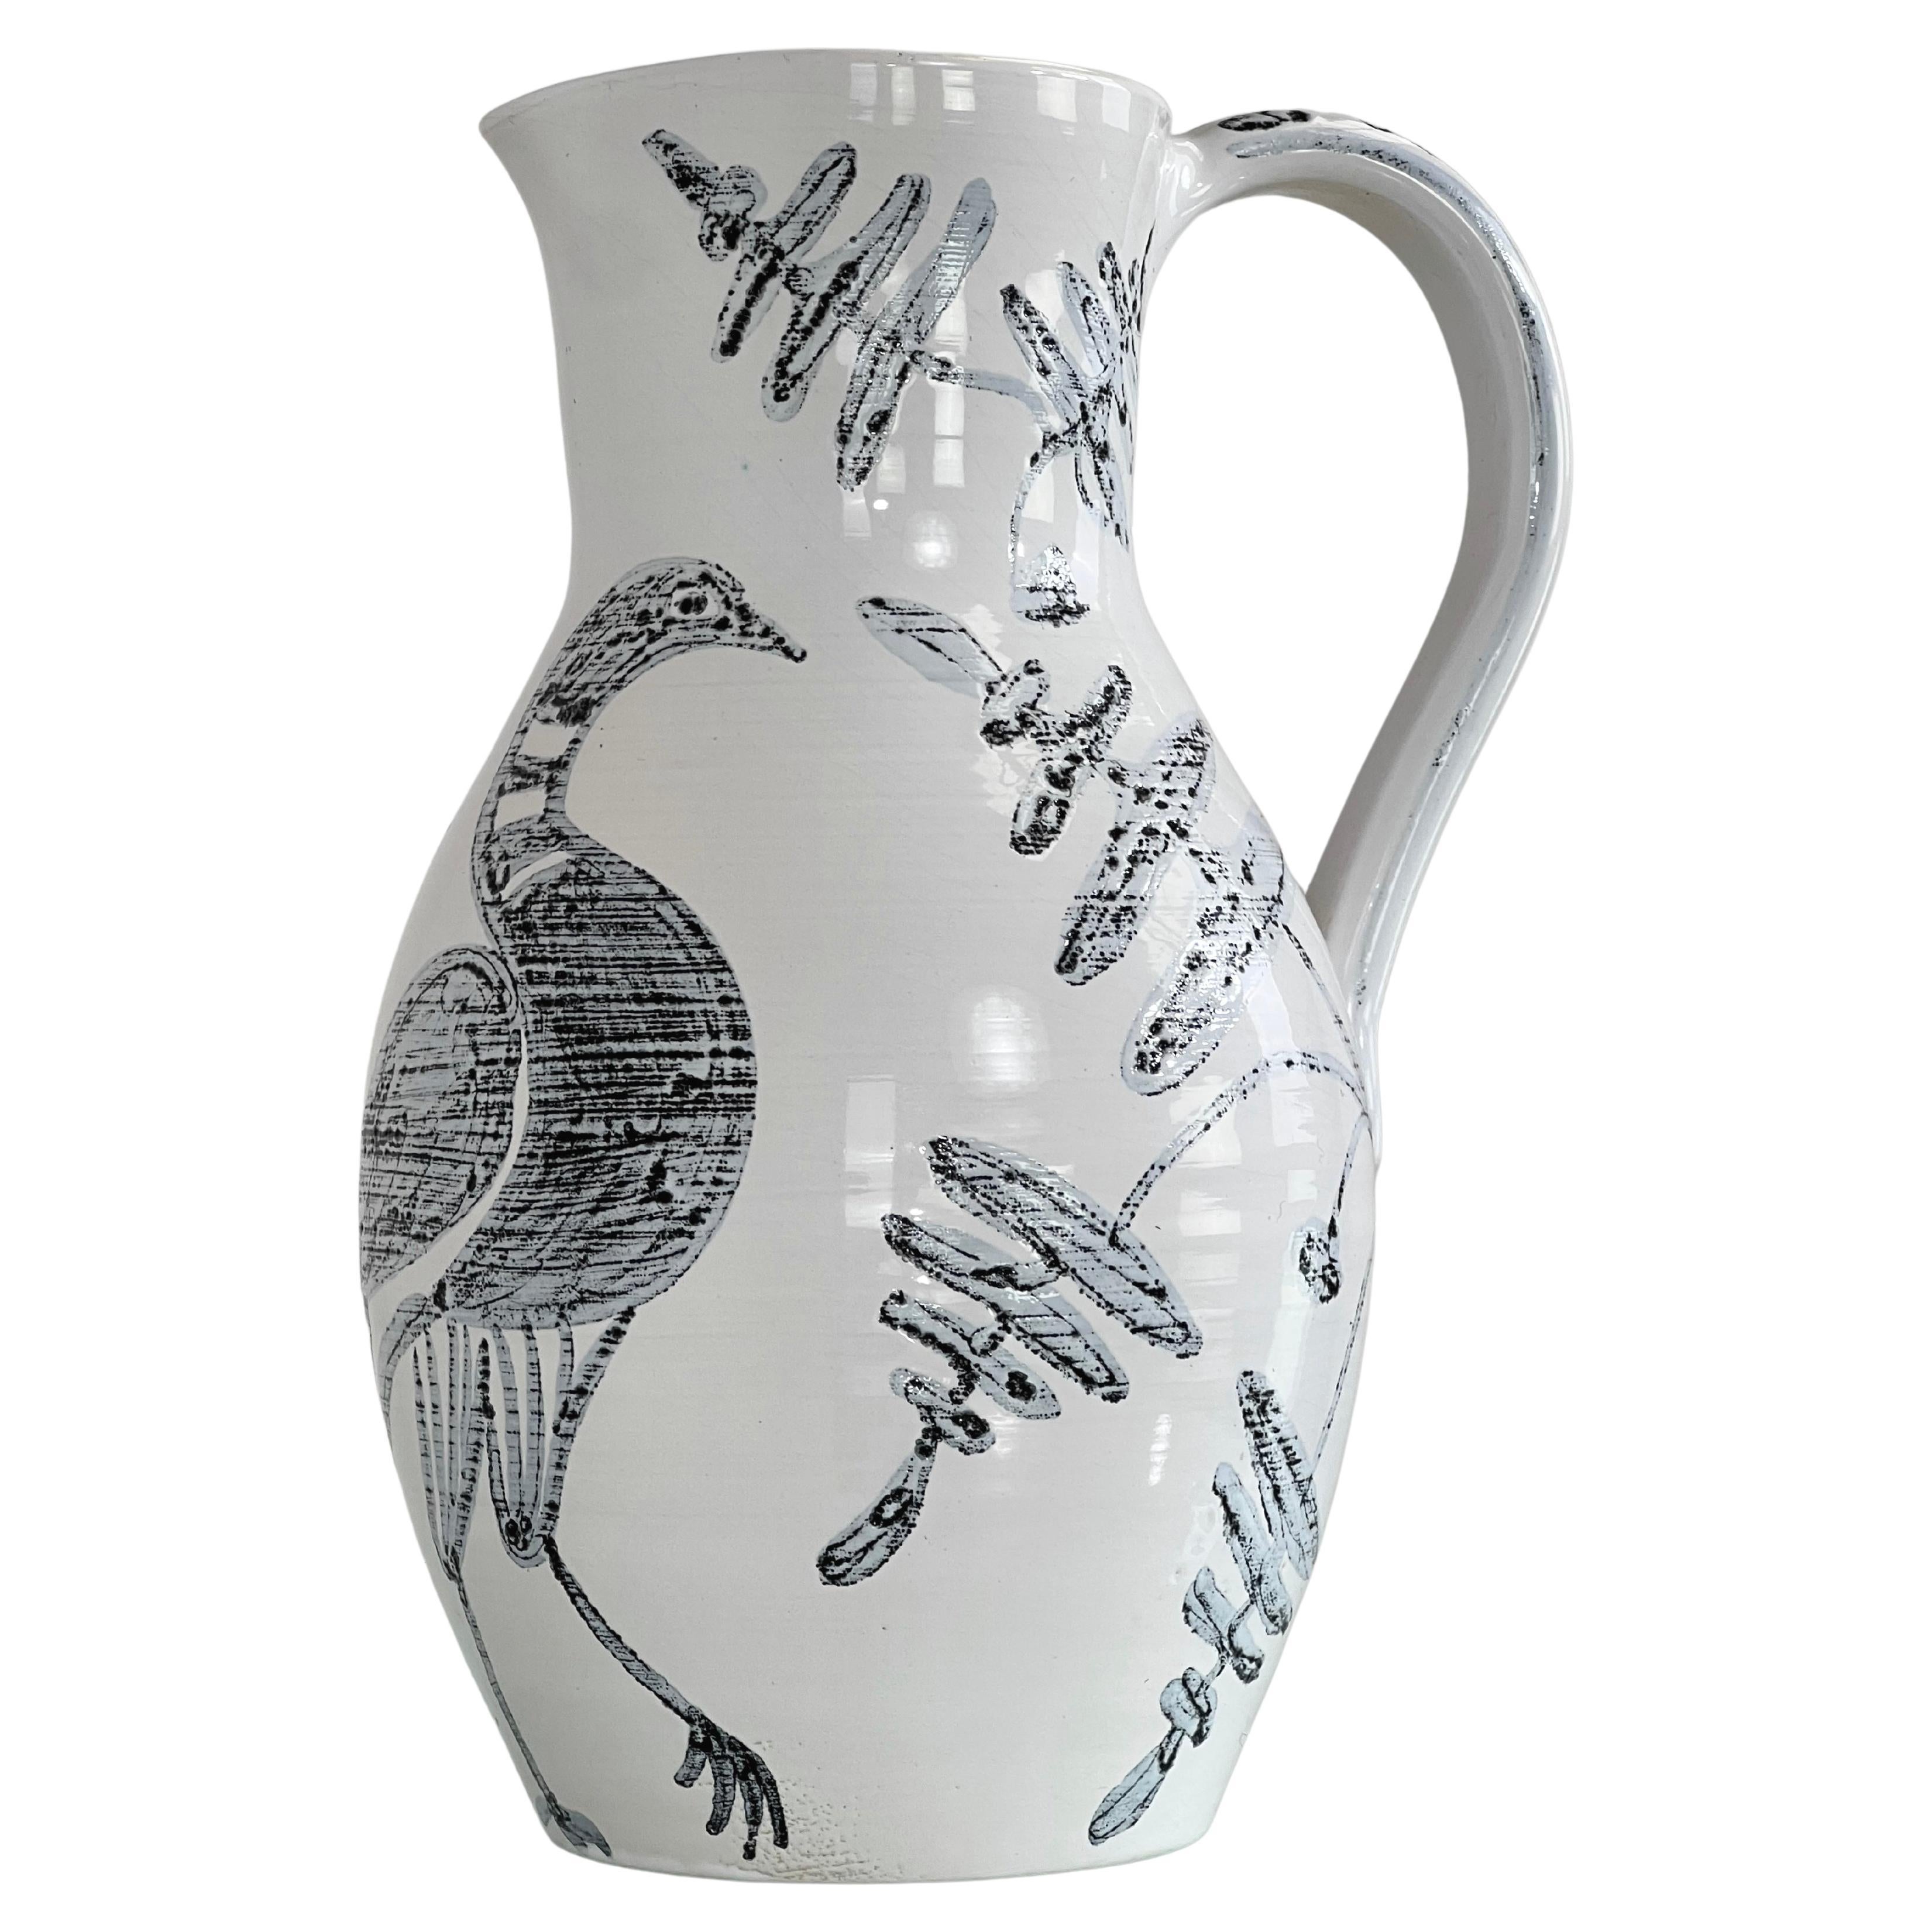 1960s Handmade Ceramic Pitcher Vase